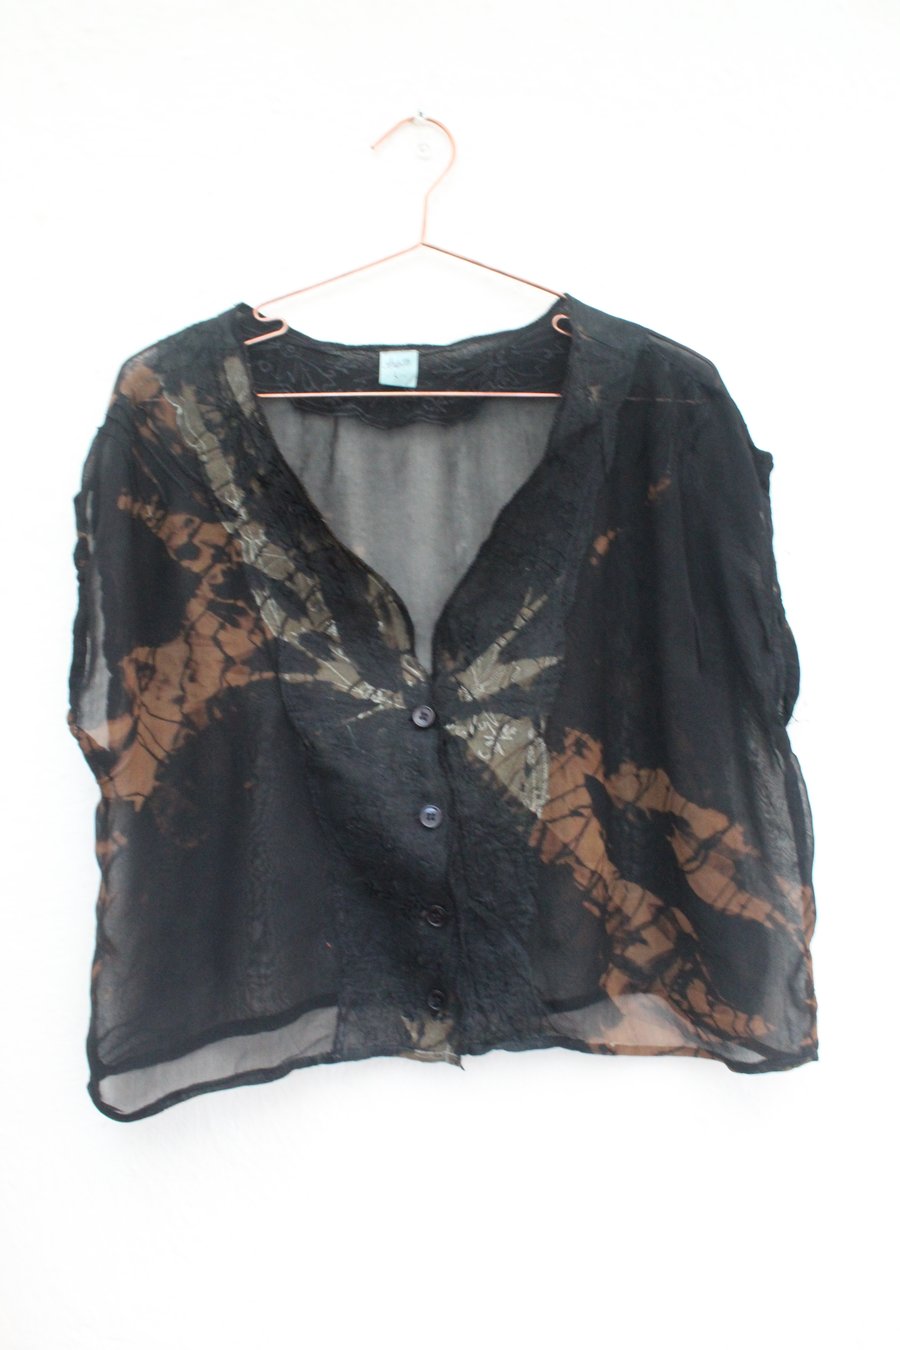 Ladies Vintage 90's reworked black and bronze tie dye blouse,festival,hippie top